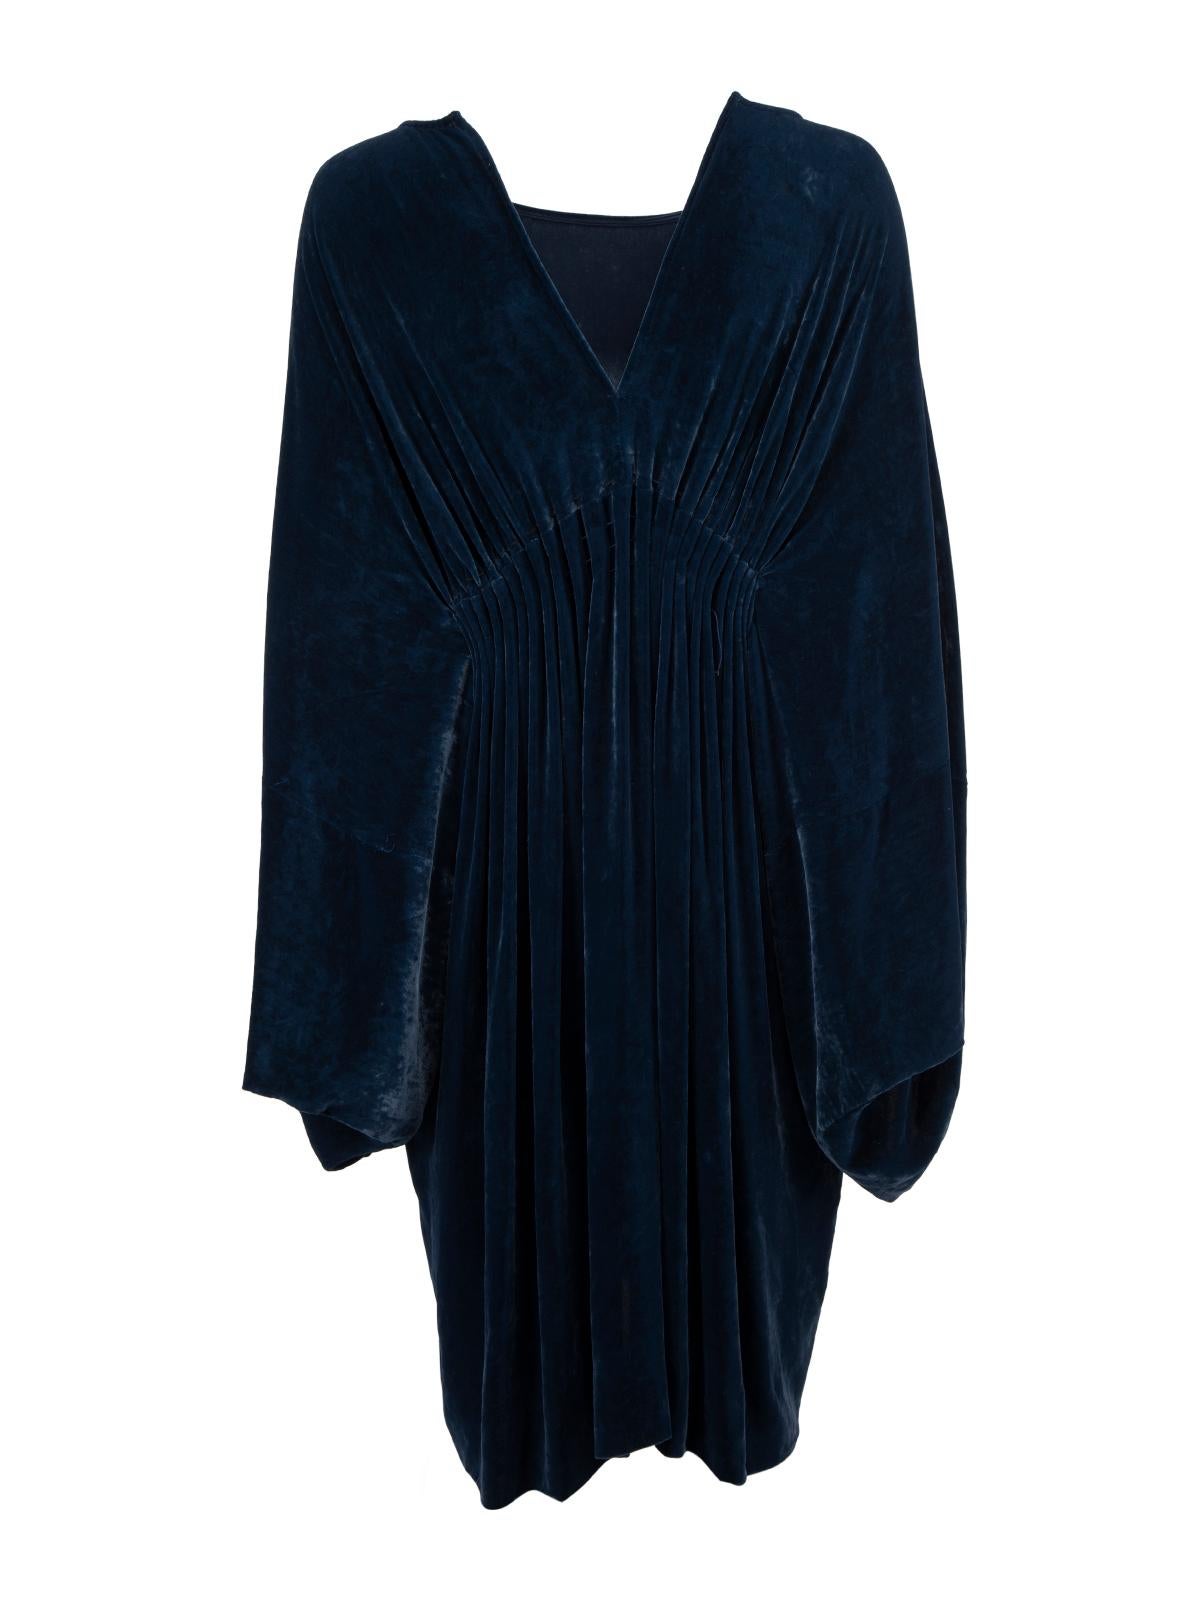 Stella McCartney Women's Velvet Open Back Cape Dress In Excellent Condition For Sale In London, GB